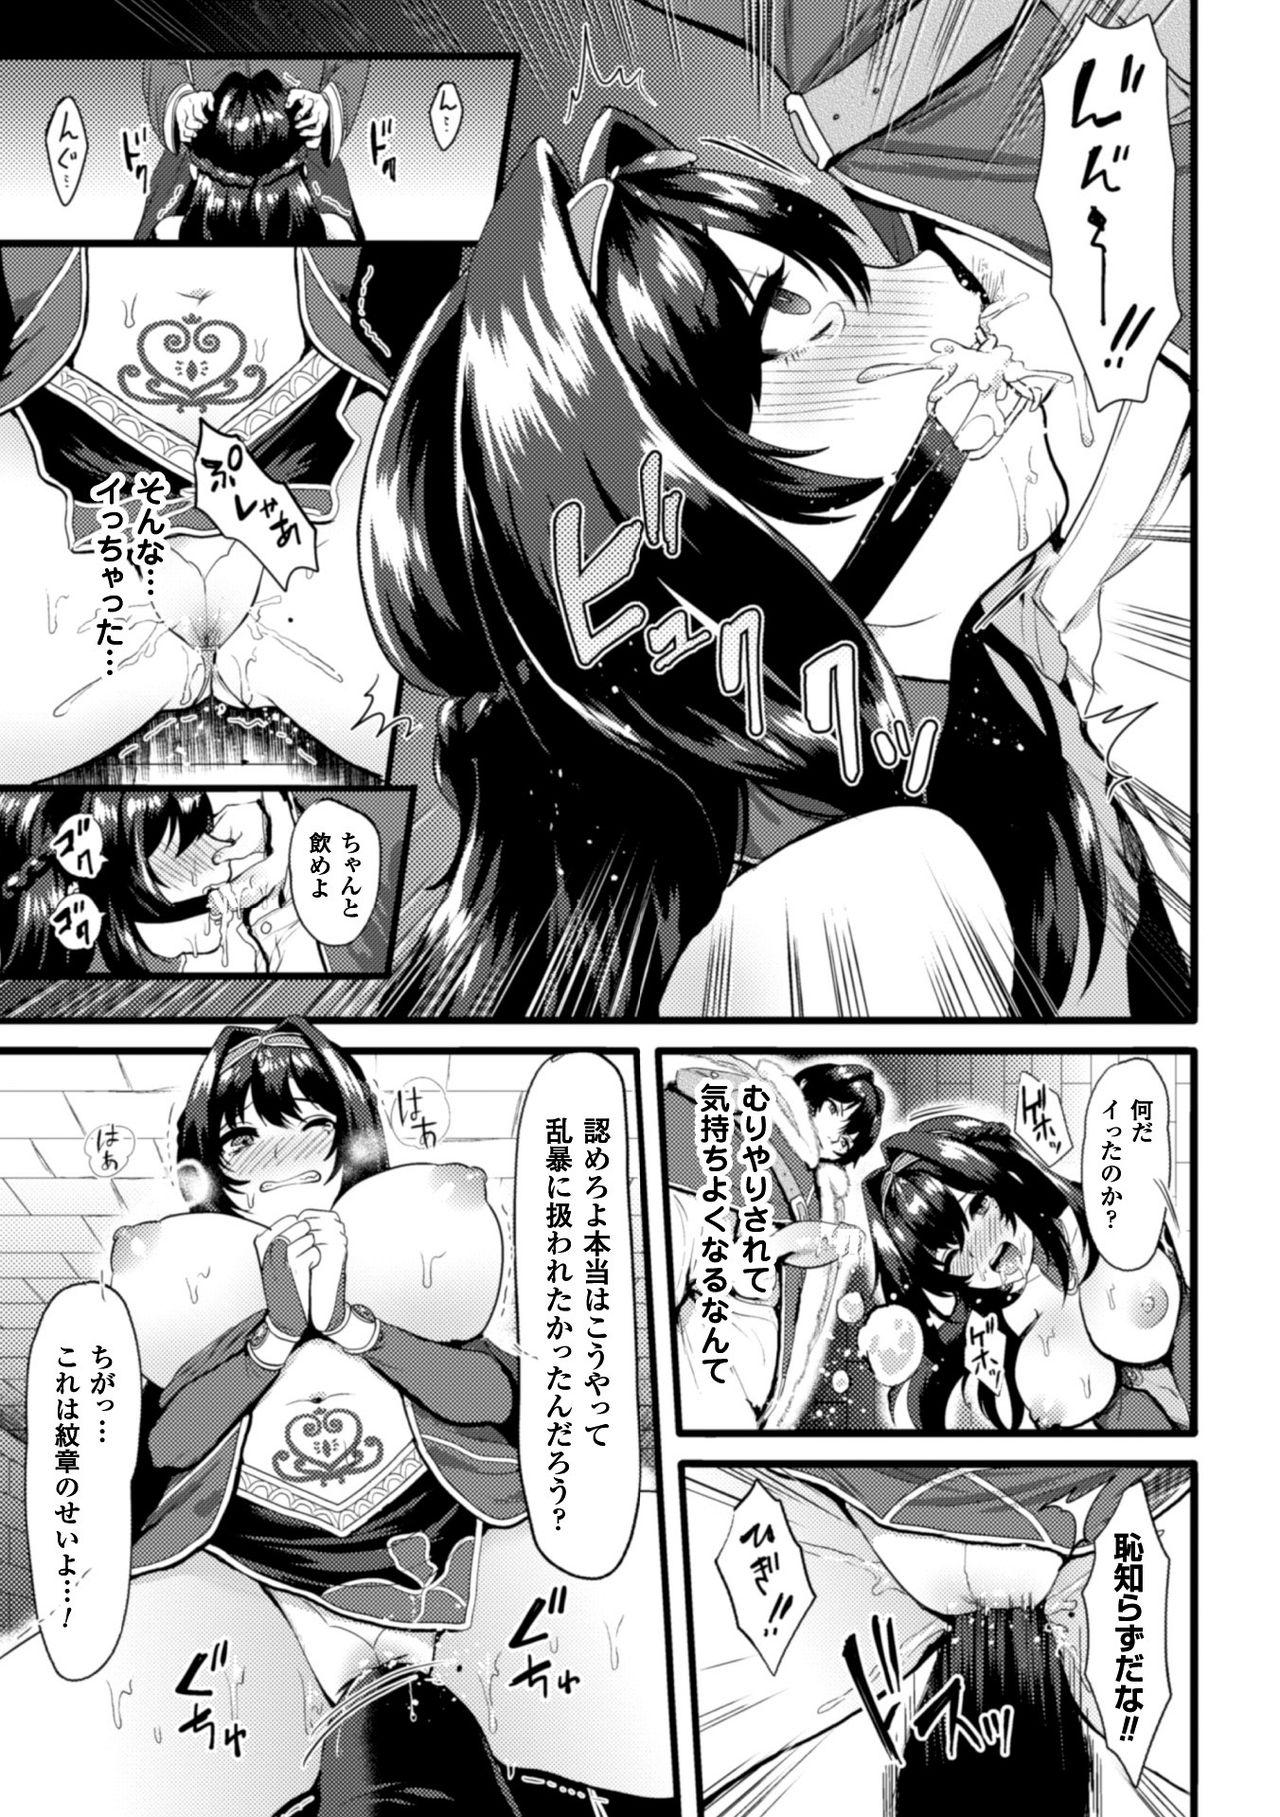 2D Comic Magazine TS Jibun Heroine mou Hitori no Ore ga Erosugite Gaman Dekinee! Vol. 1 29